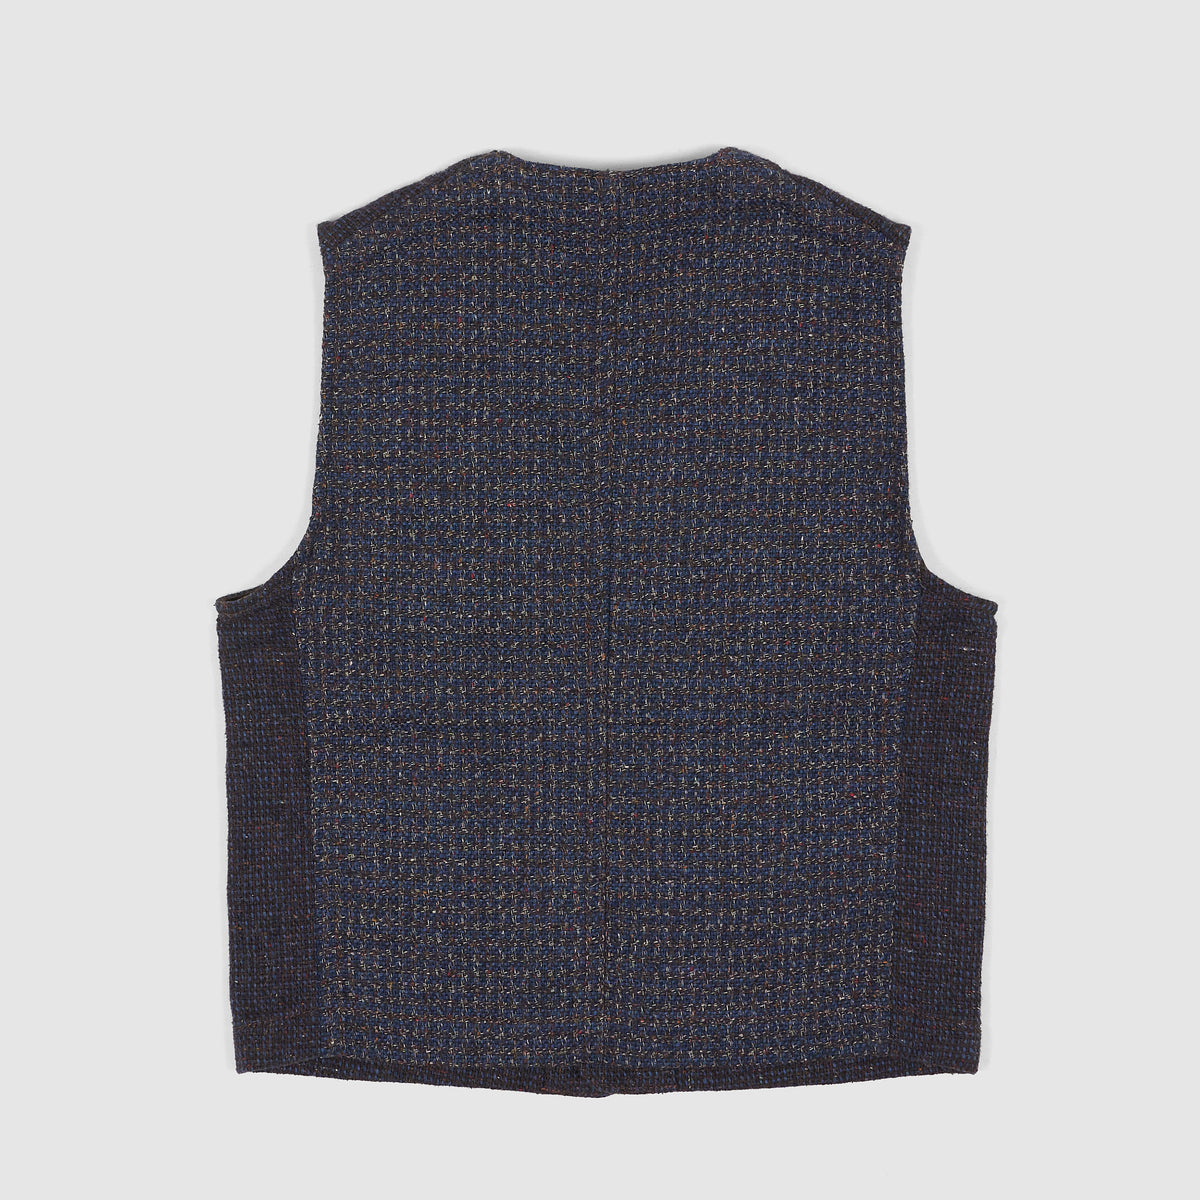 45r Cotton Tweed Vest